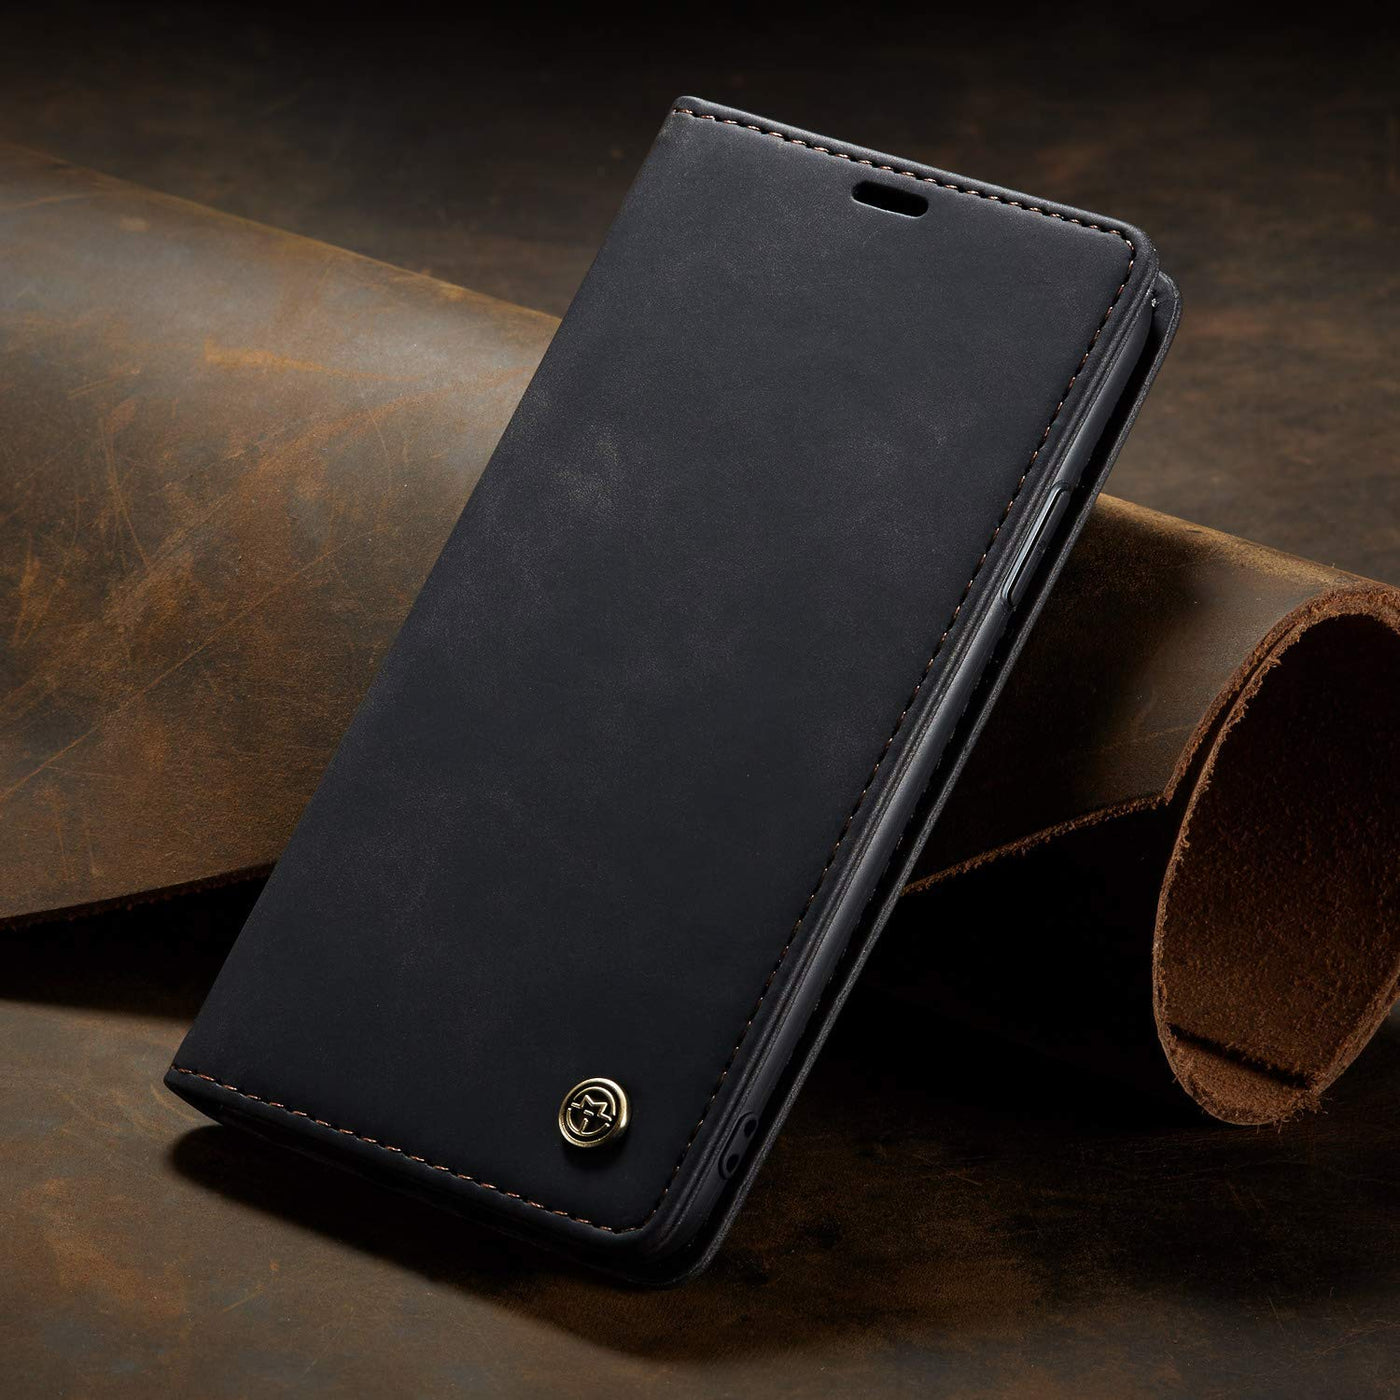 Excelsior Premium Leather Wallet flip Cover Case For Apple iPhone 11 Pro